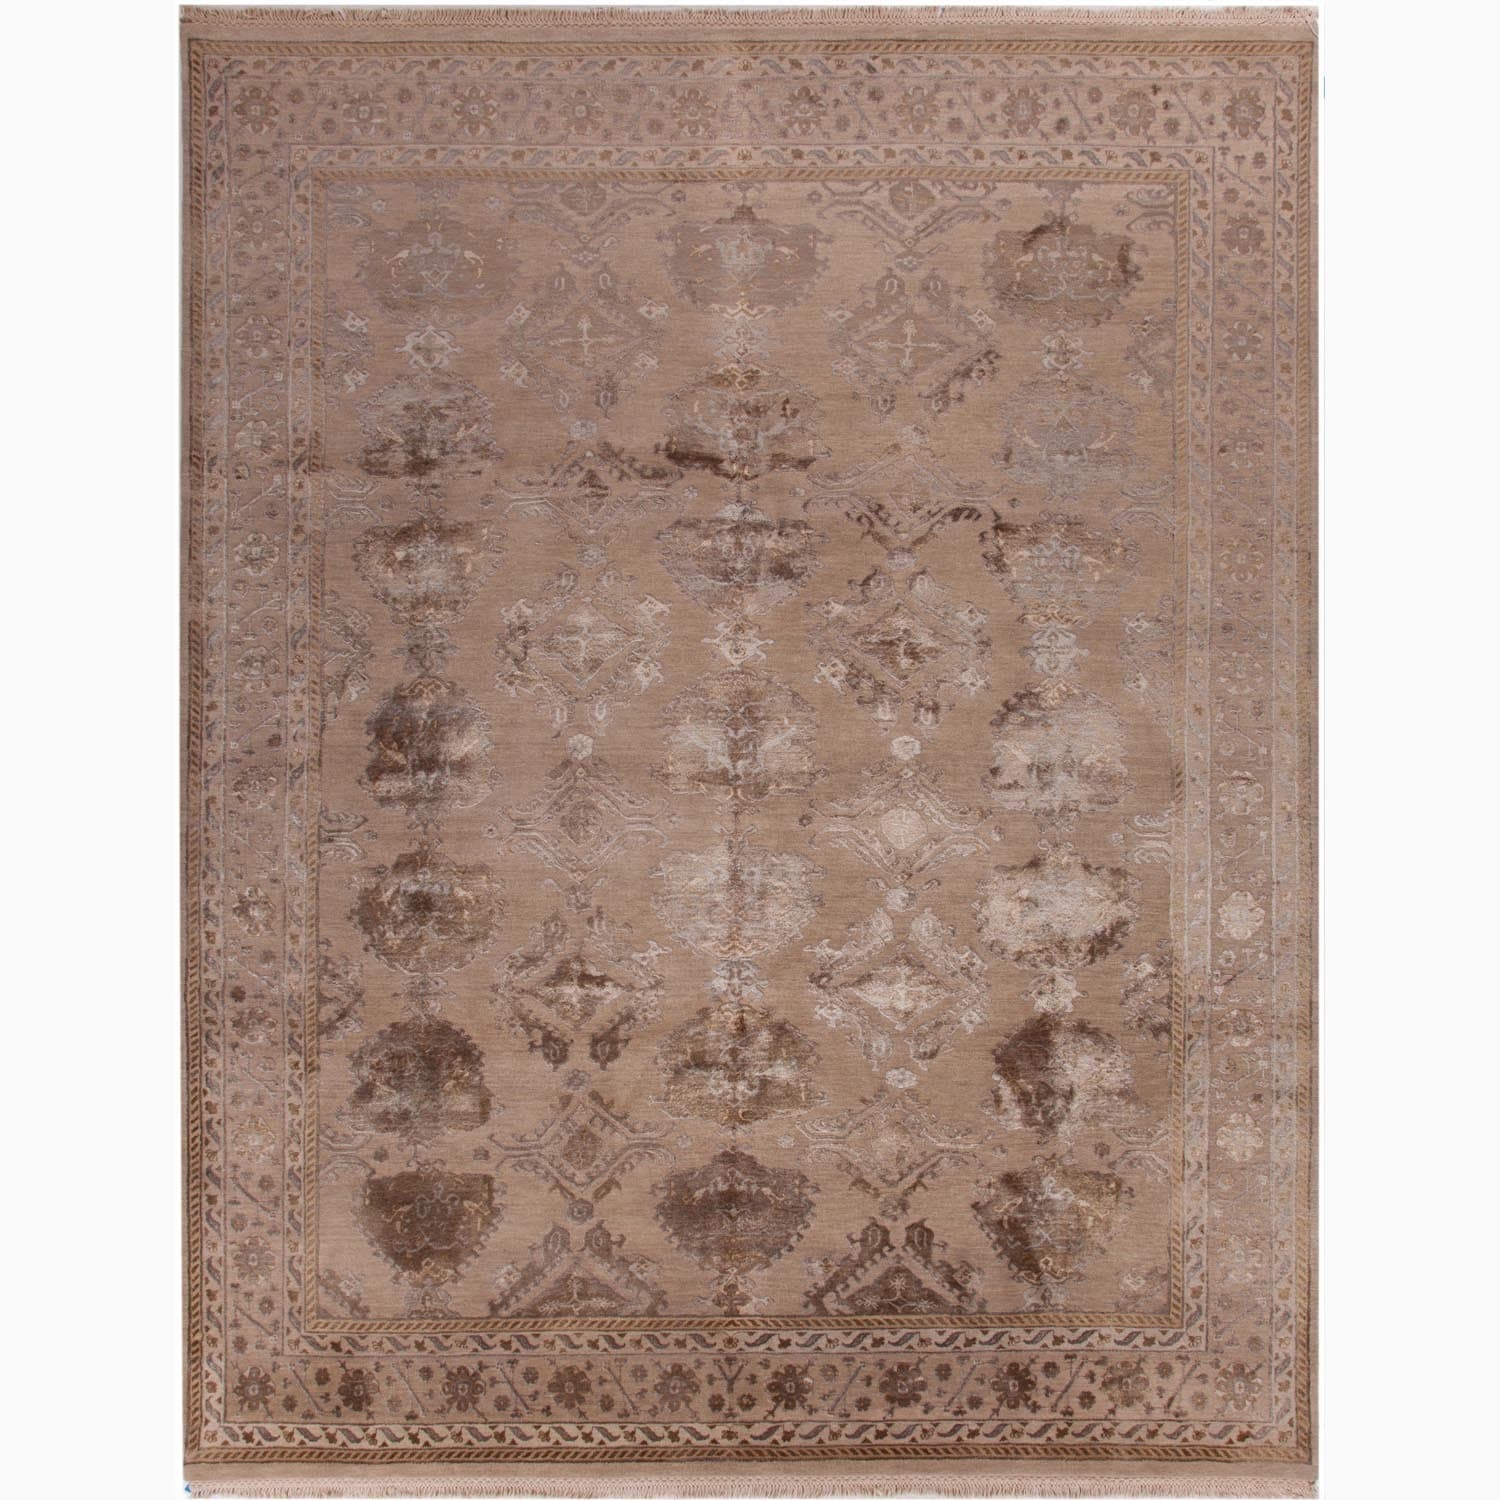 Hand made Oriental Pattern Taupe/ Gray Wool/ Silk Rug (2x3)